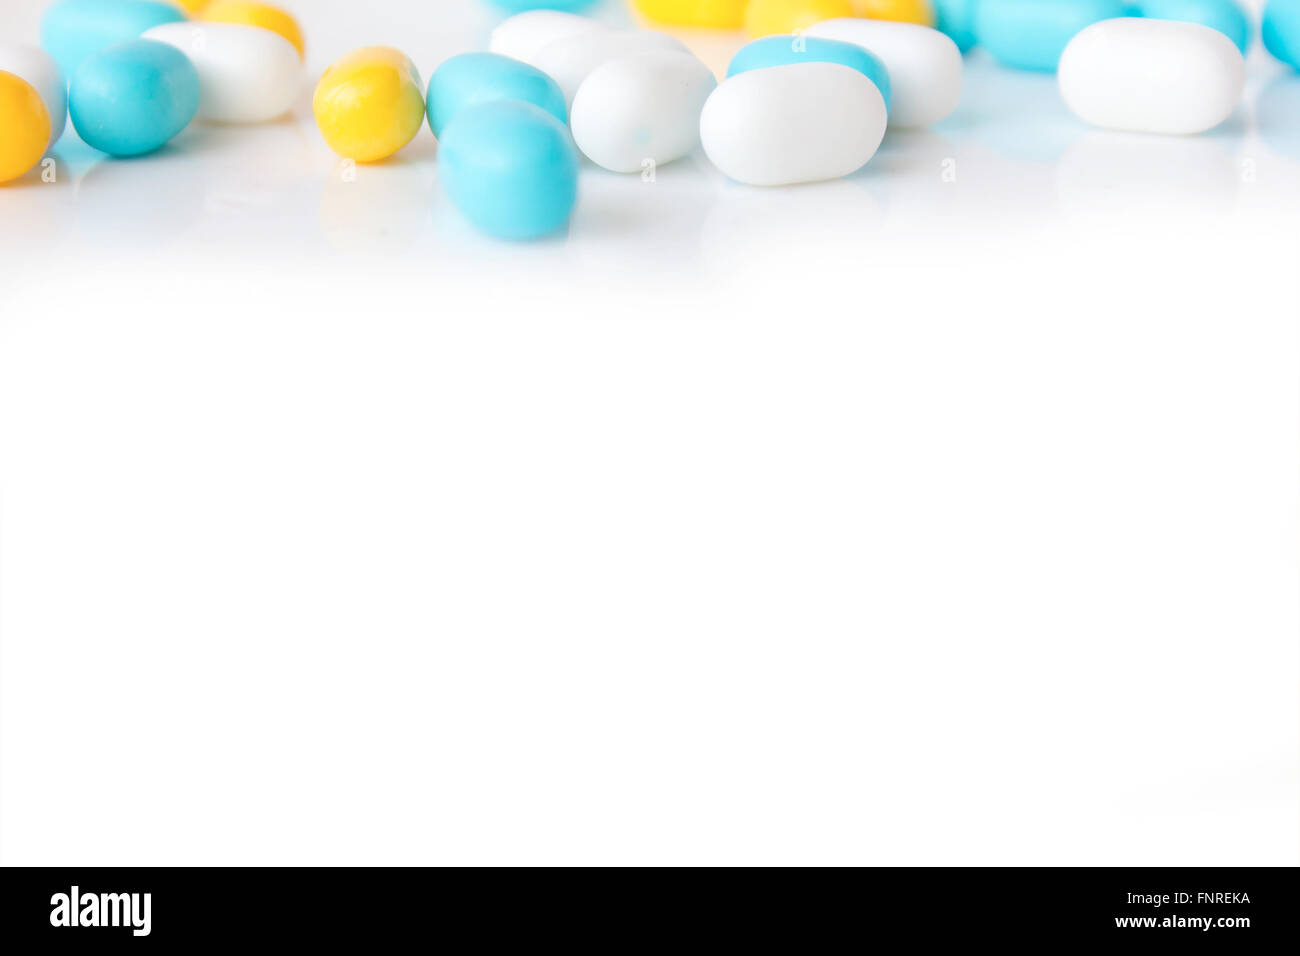 Blue yellow and white pills on white background Stock Photo